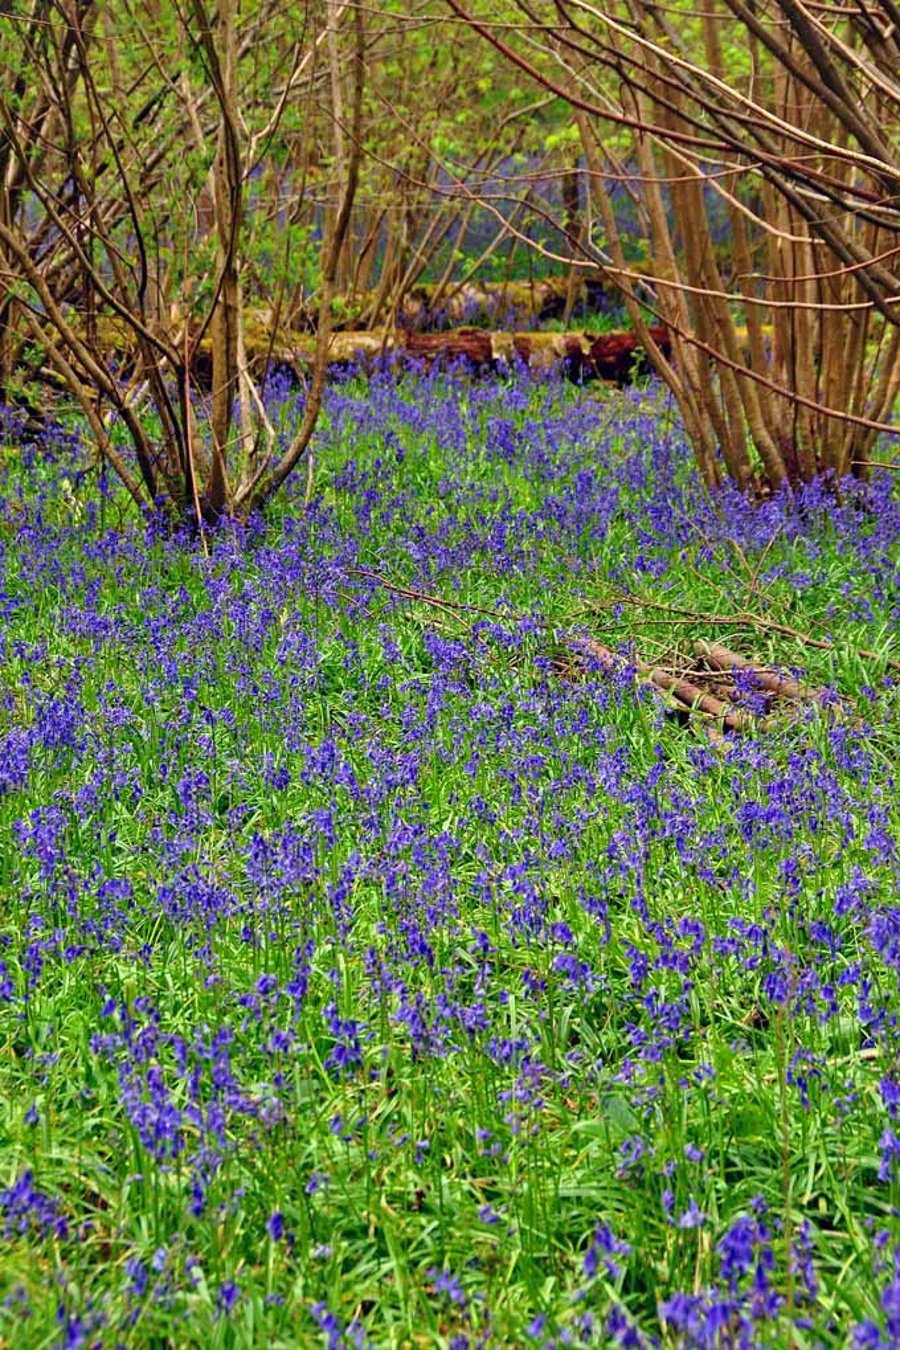 Bluebell Woods Spring Flowers Basildon Park Photograph Print